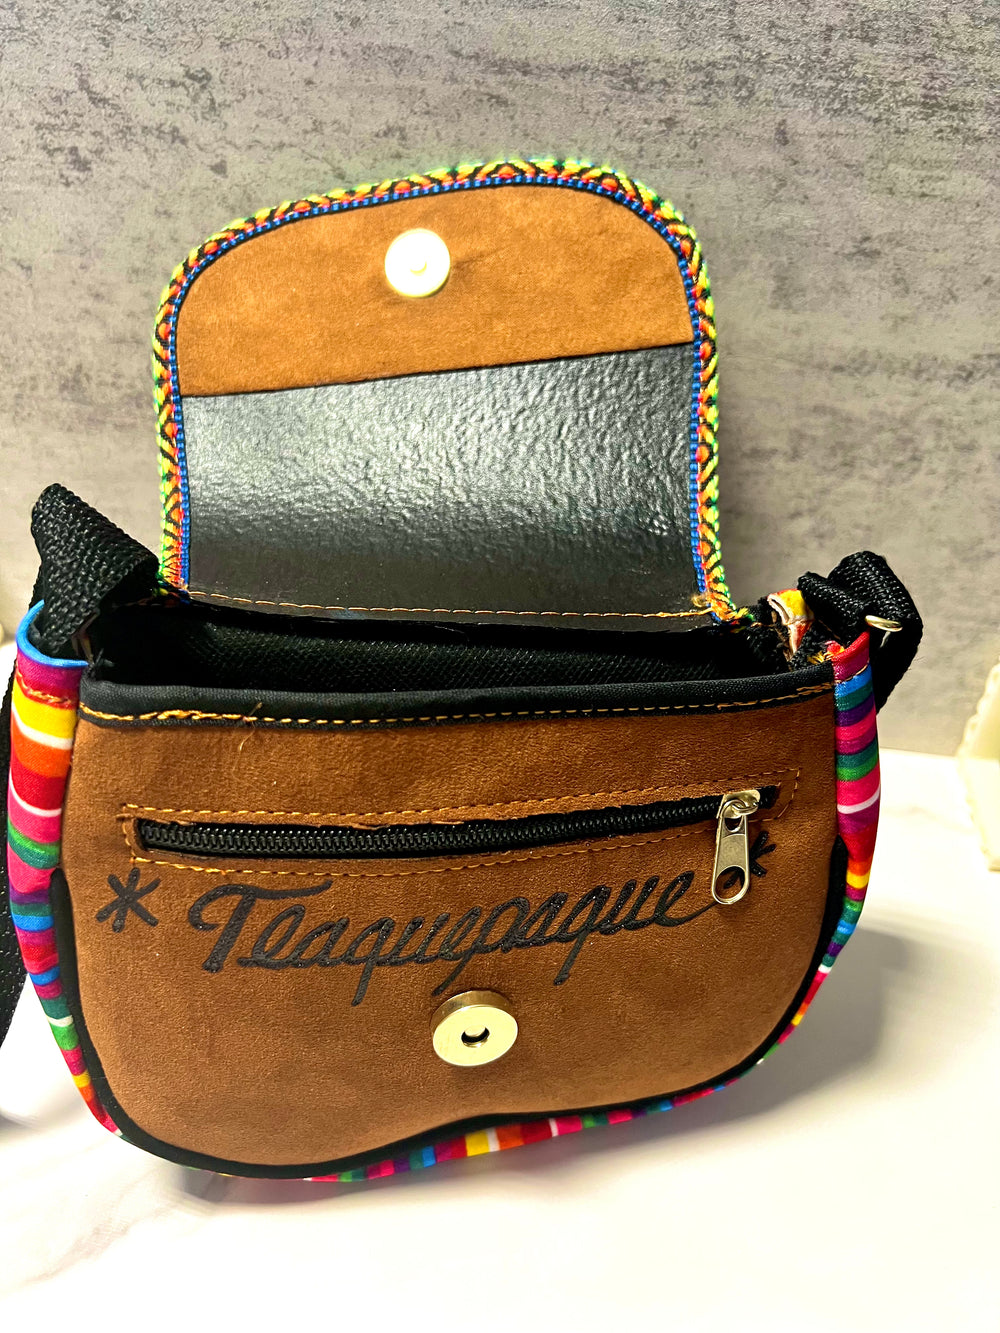 Made in Mexico Frida Kahlo Tlaquepaque Crossbody Bag Purse